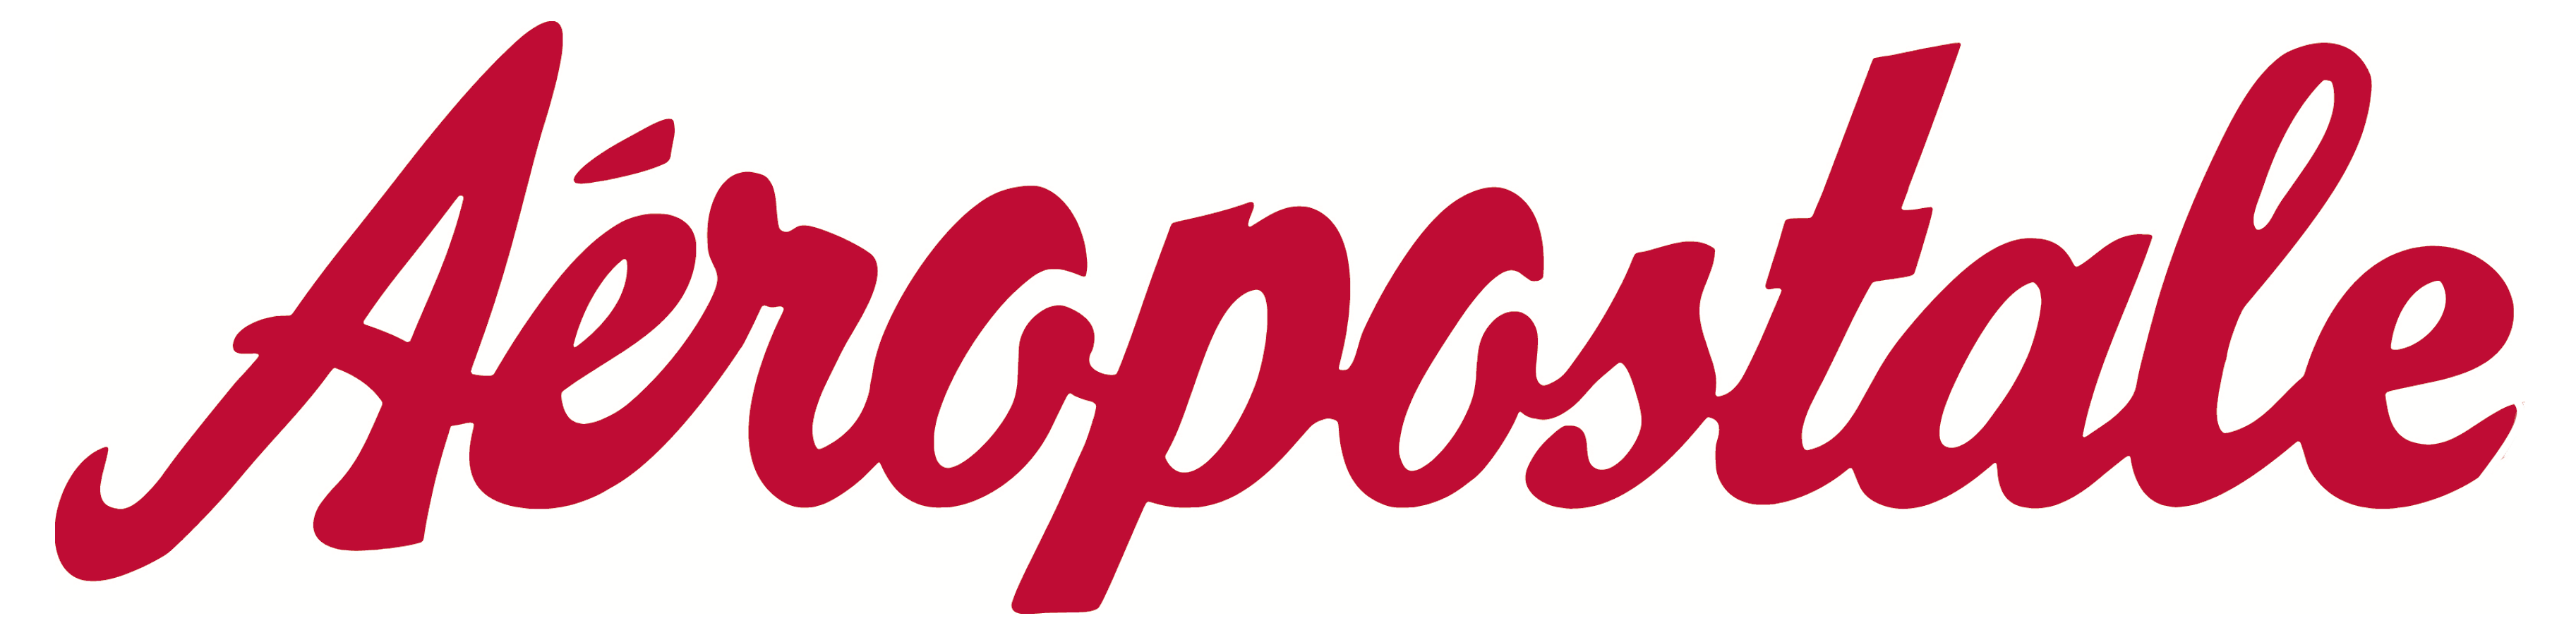 Areopostle Logo.